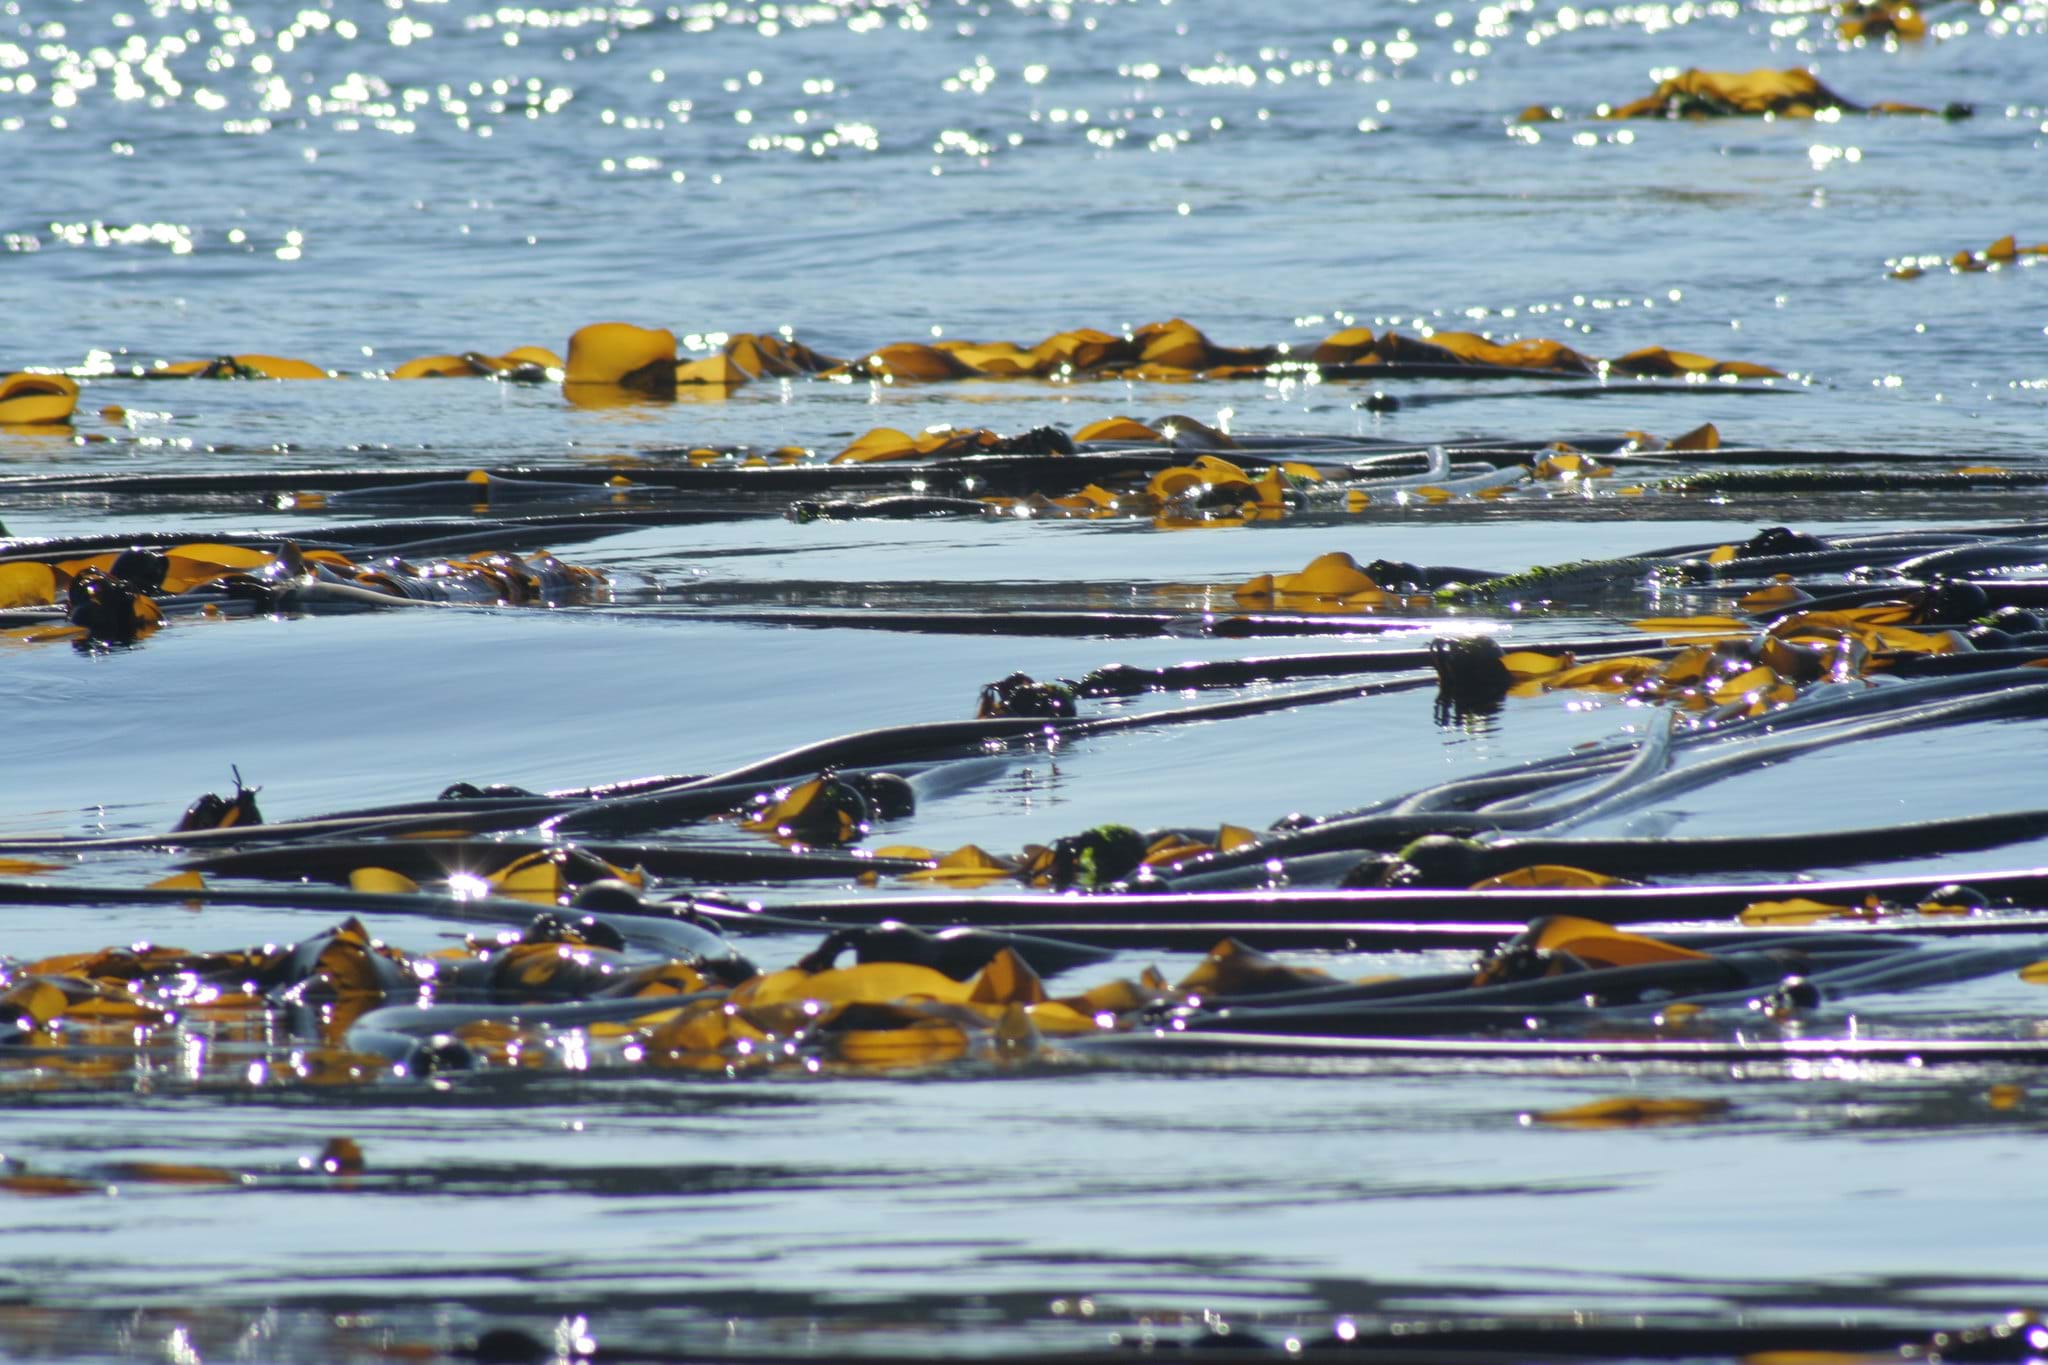 Kelp floating at the sea shore